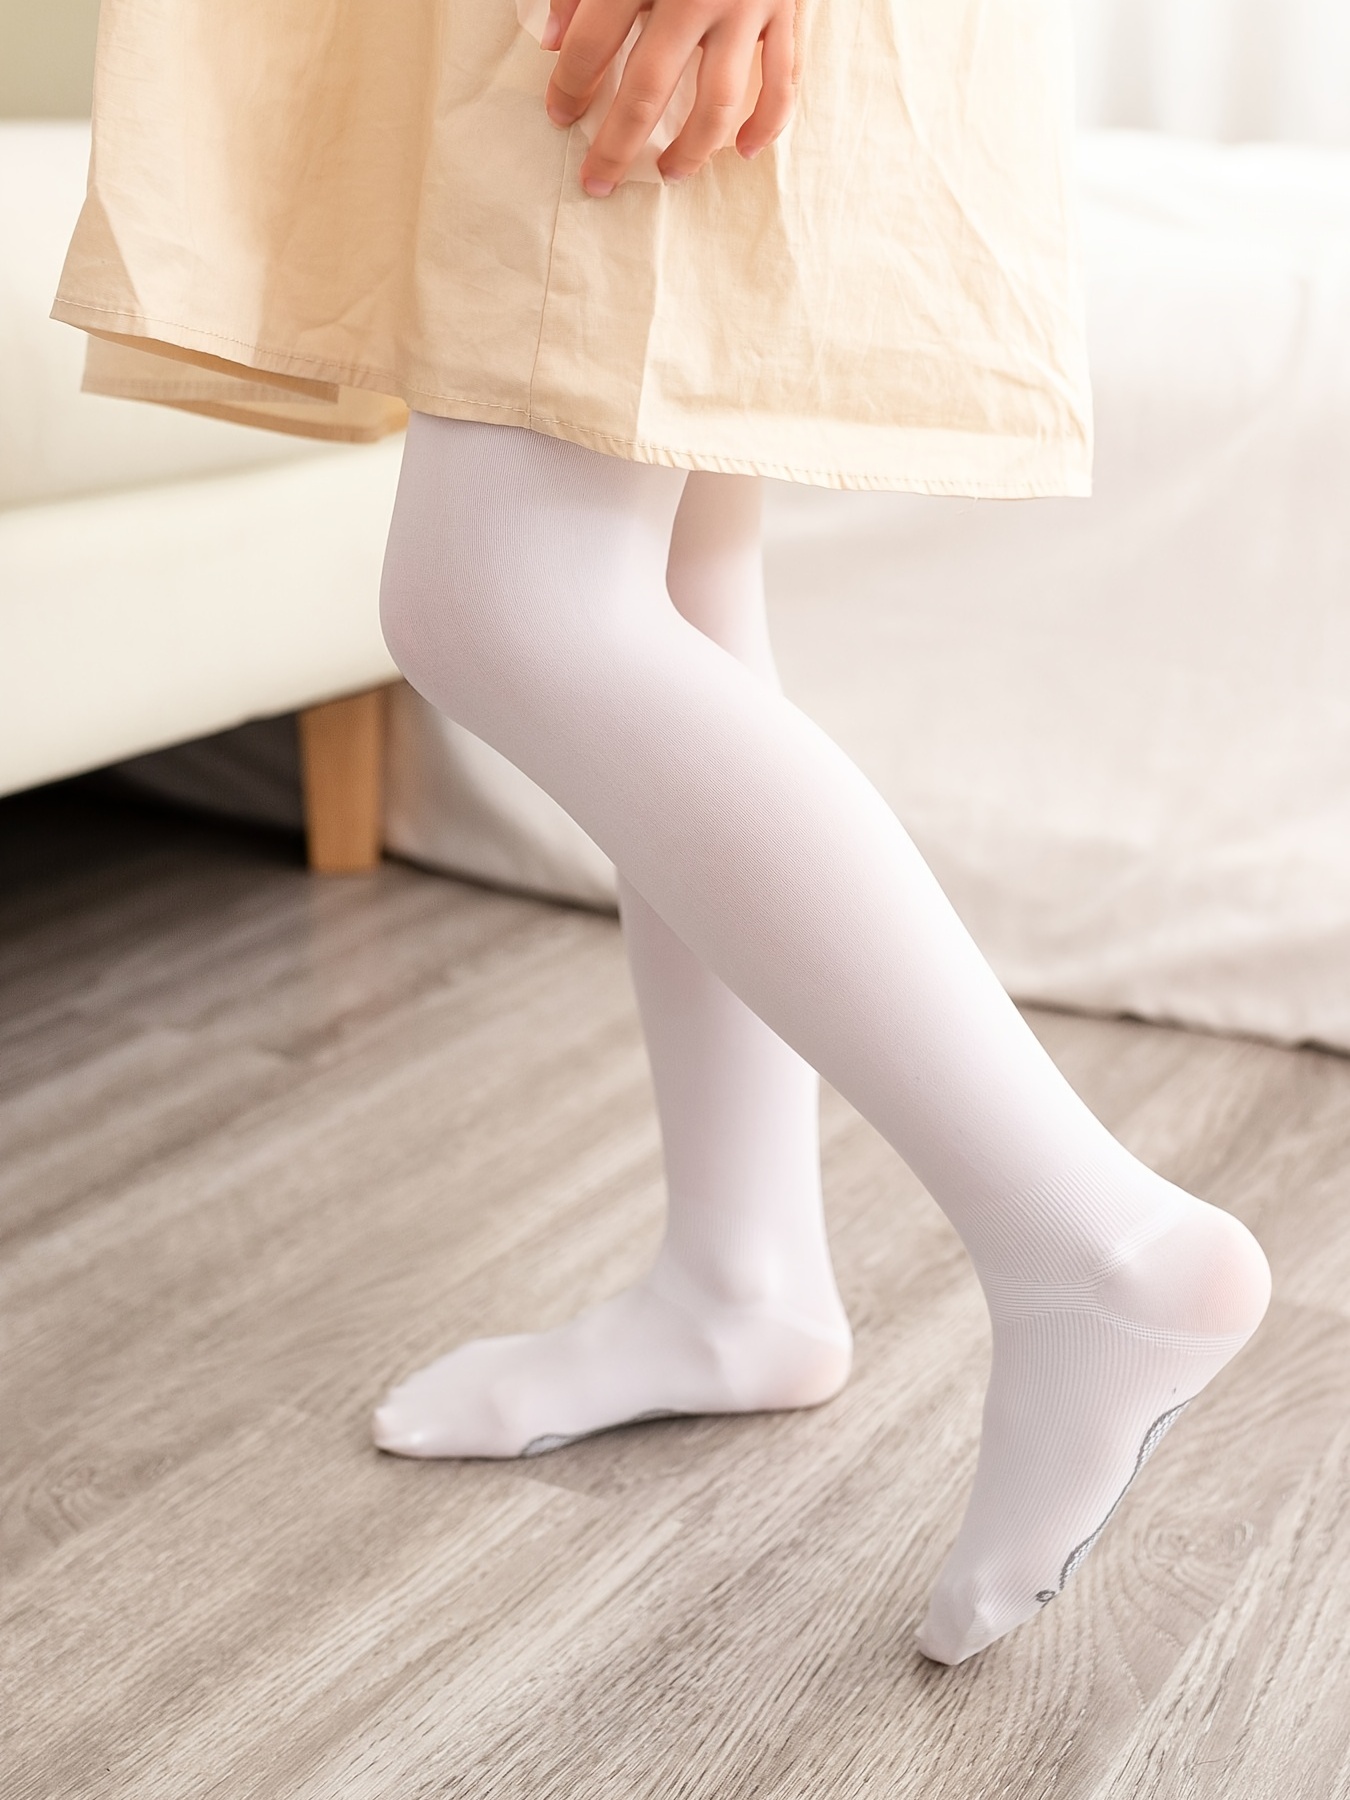 Girls Stretch Pantyhose Soft Tights Leggings Pants Stockings